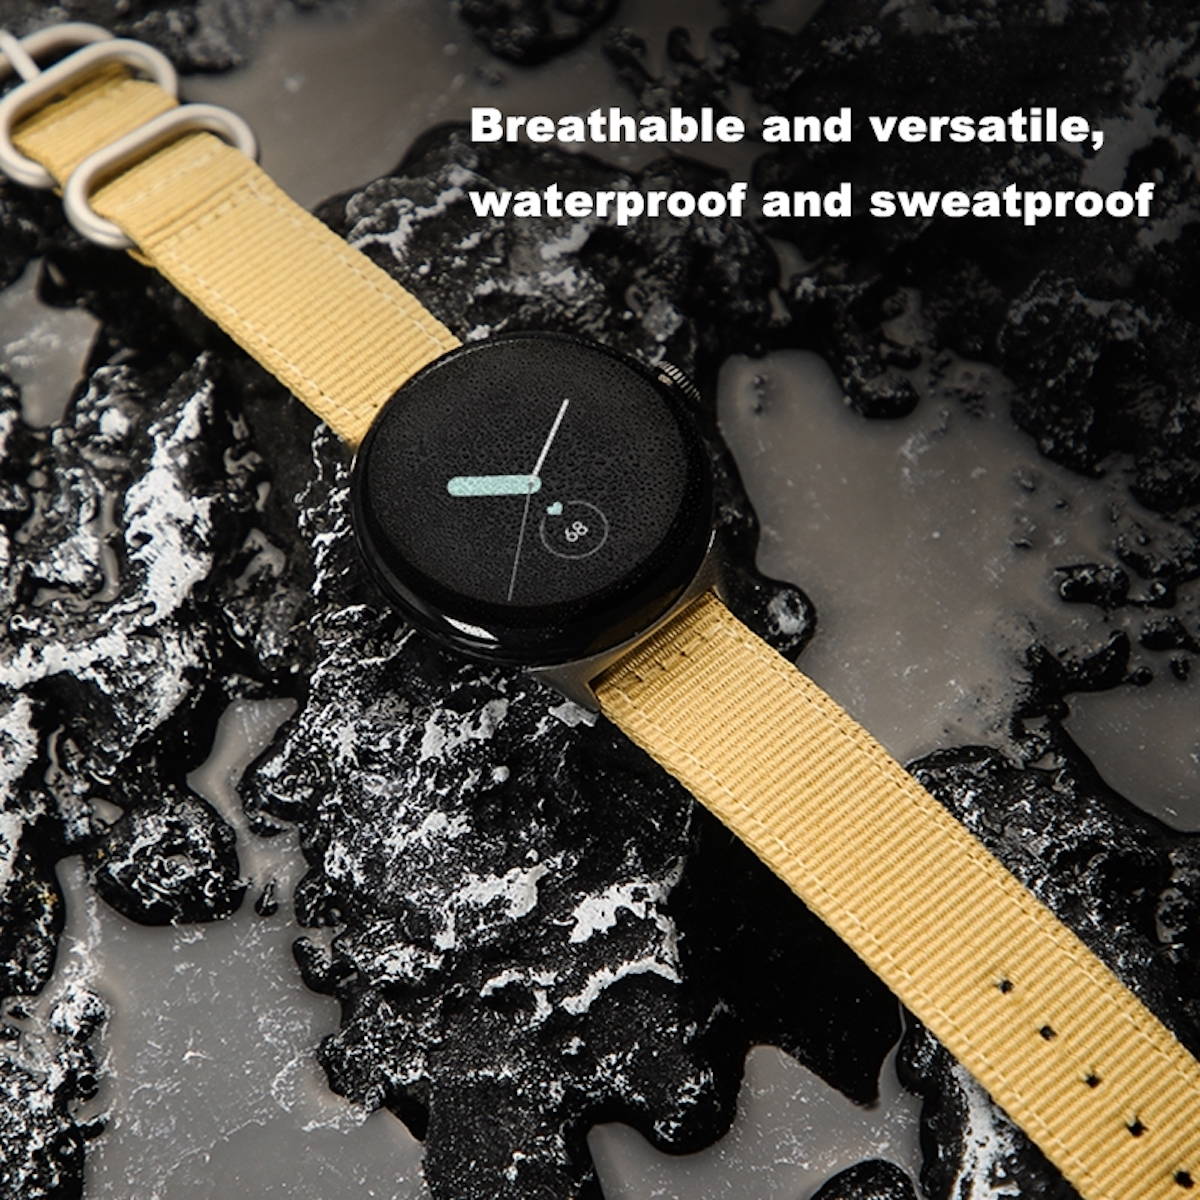 Nylon Design Google 2, Band, Ersatzarmband, + Google, Gewebtes Pixel Watch Orange/Silber WIGENTO 1